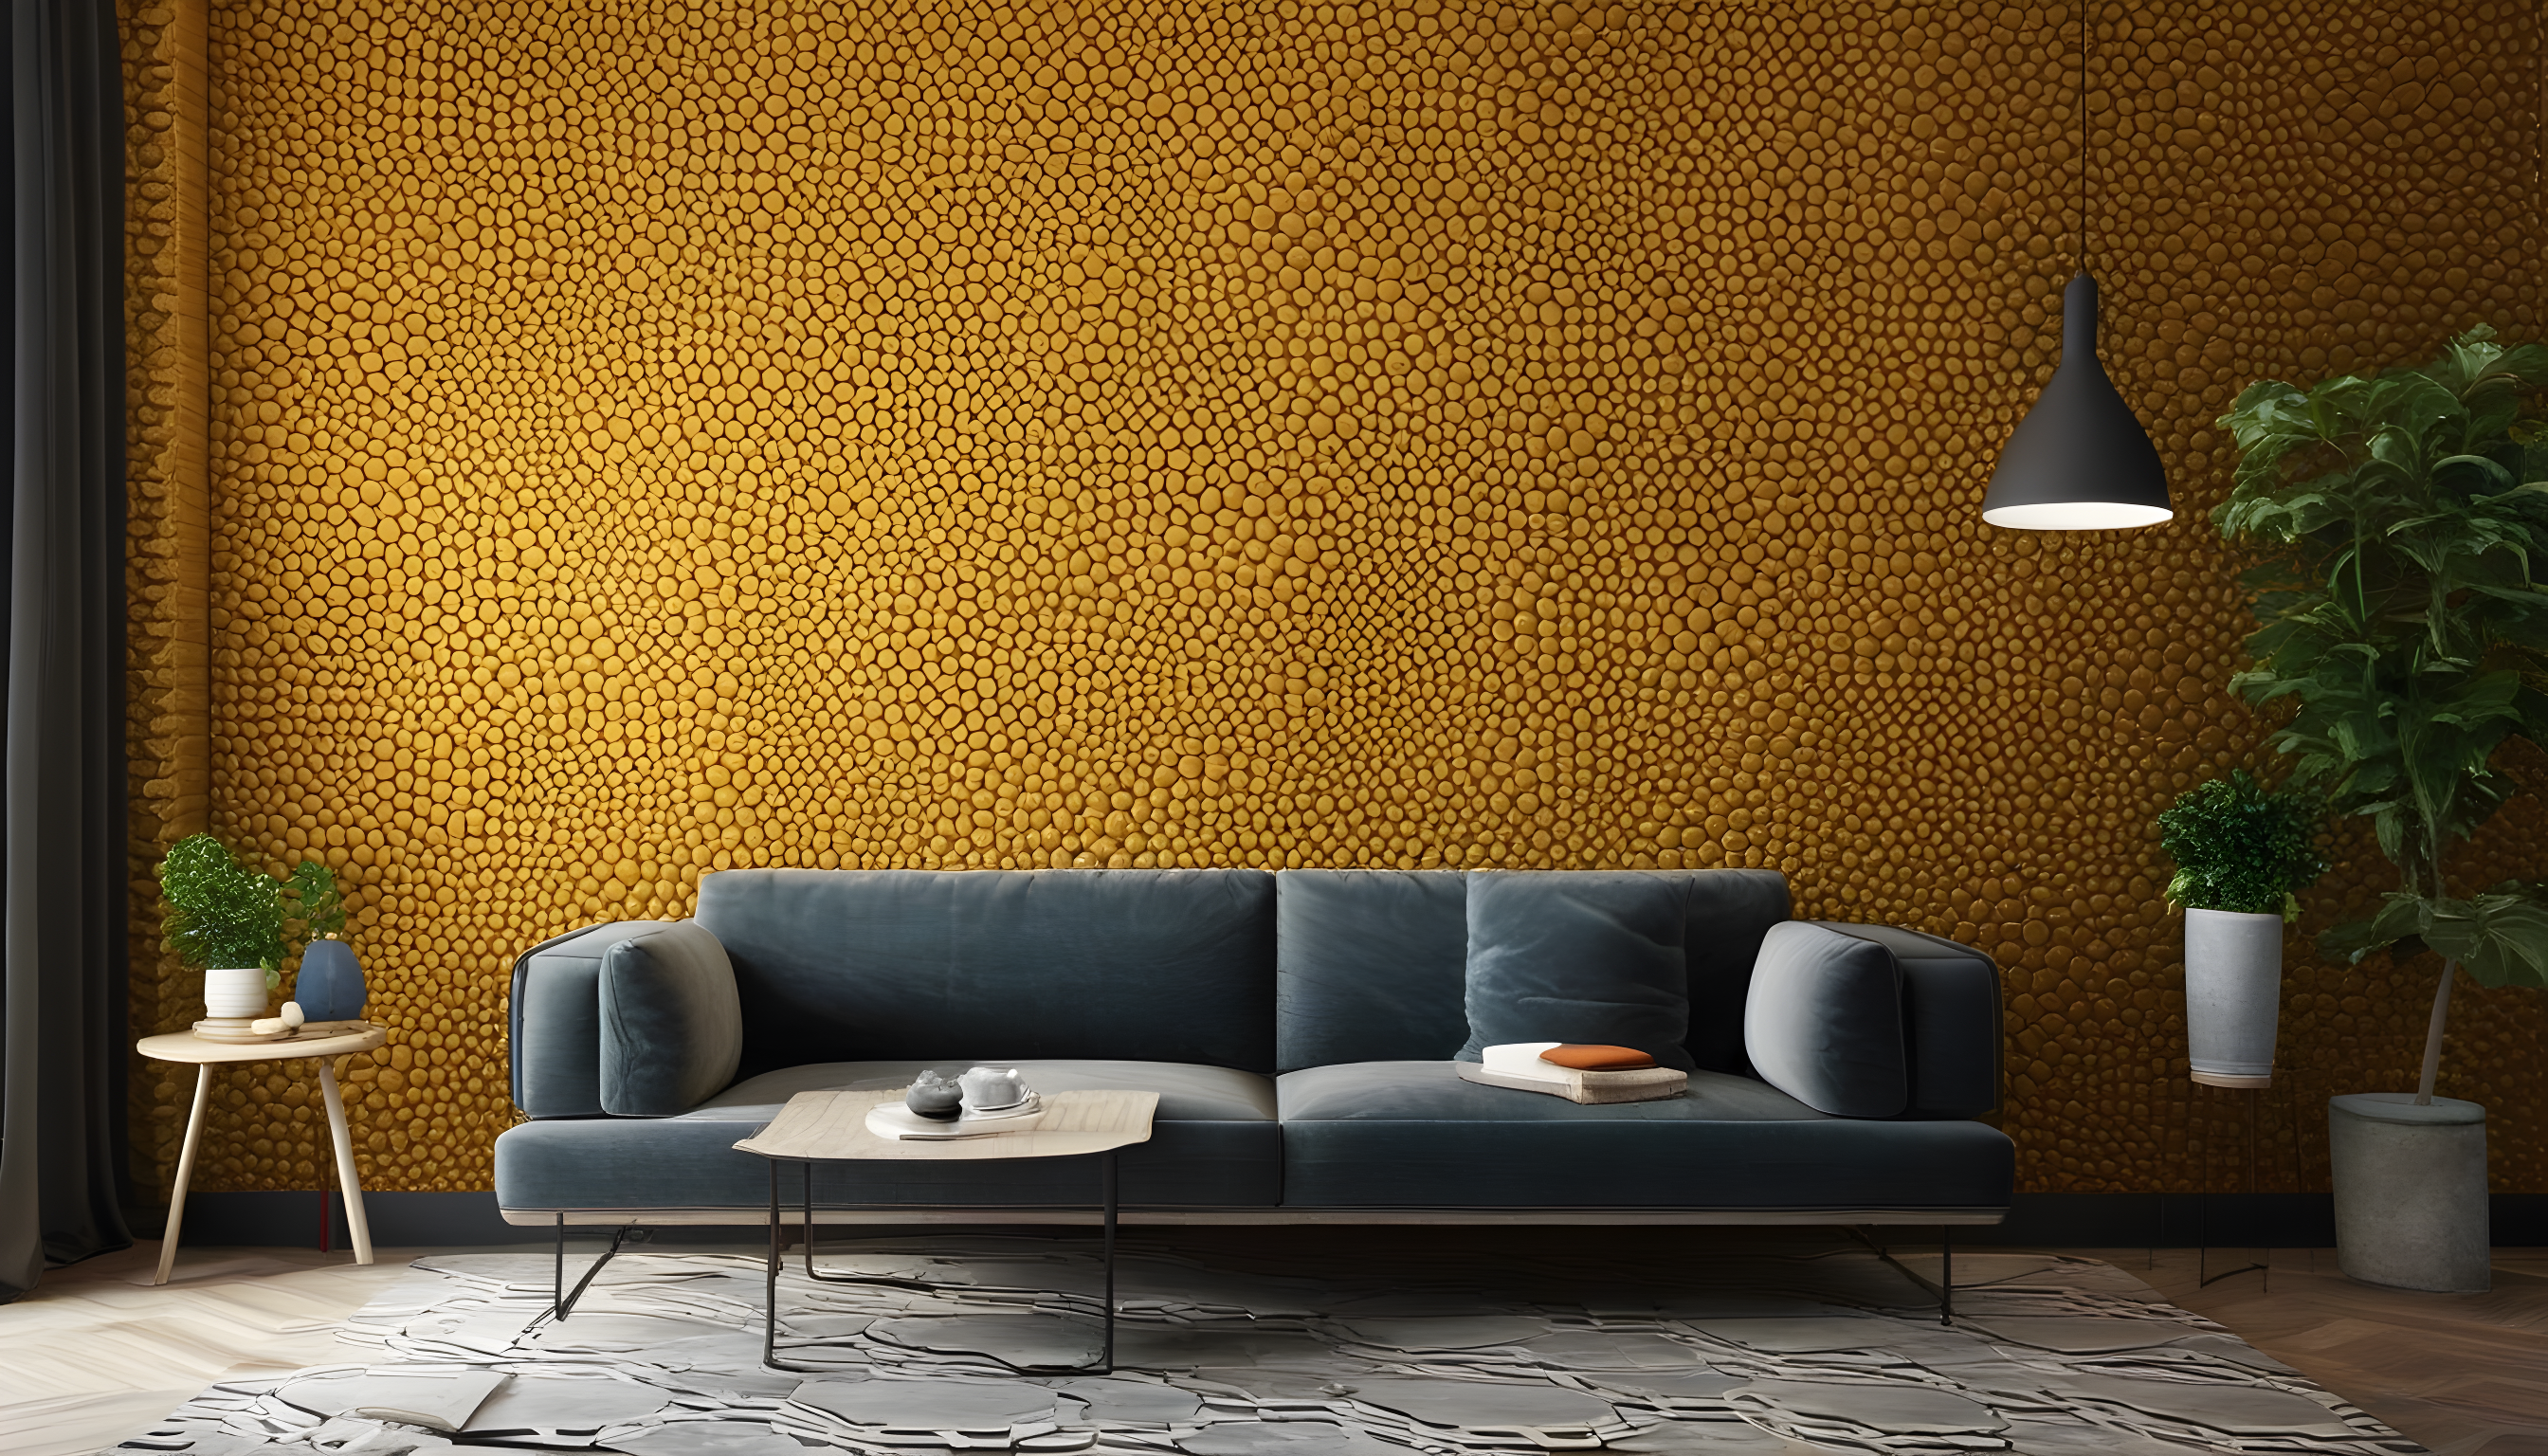 Hive Texture livingroom wall